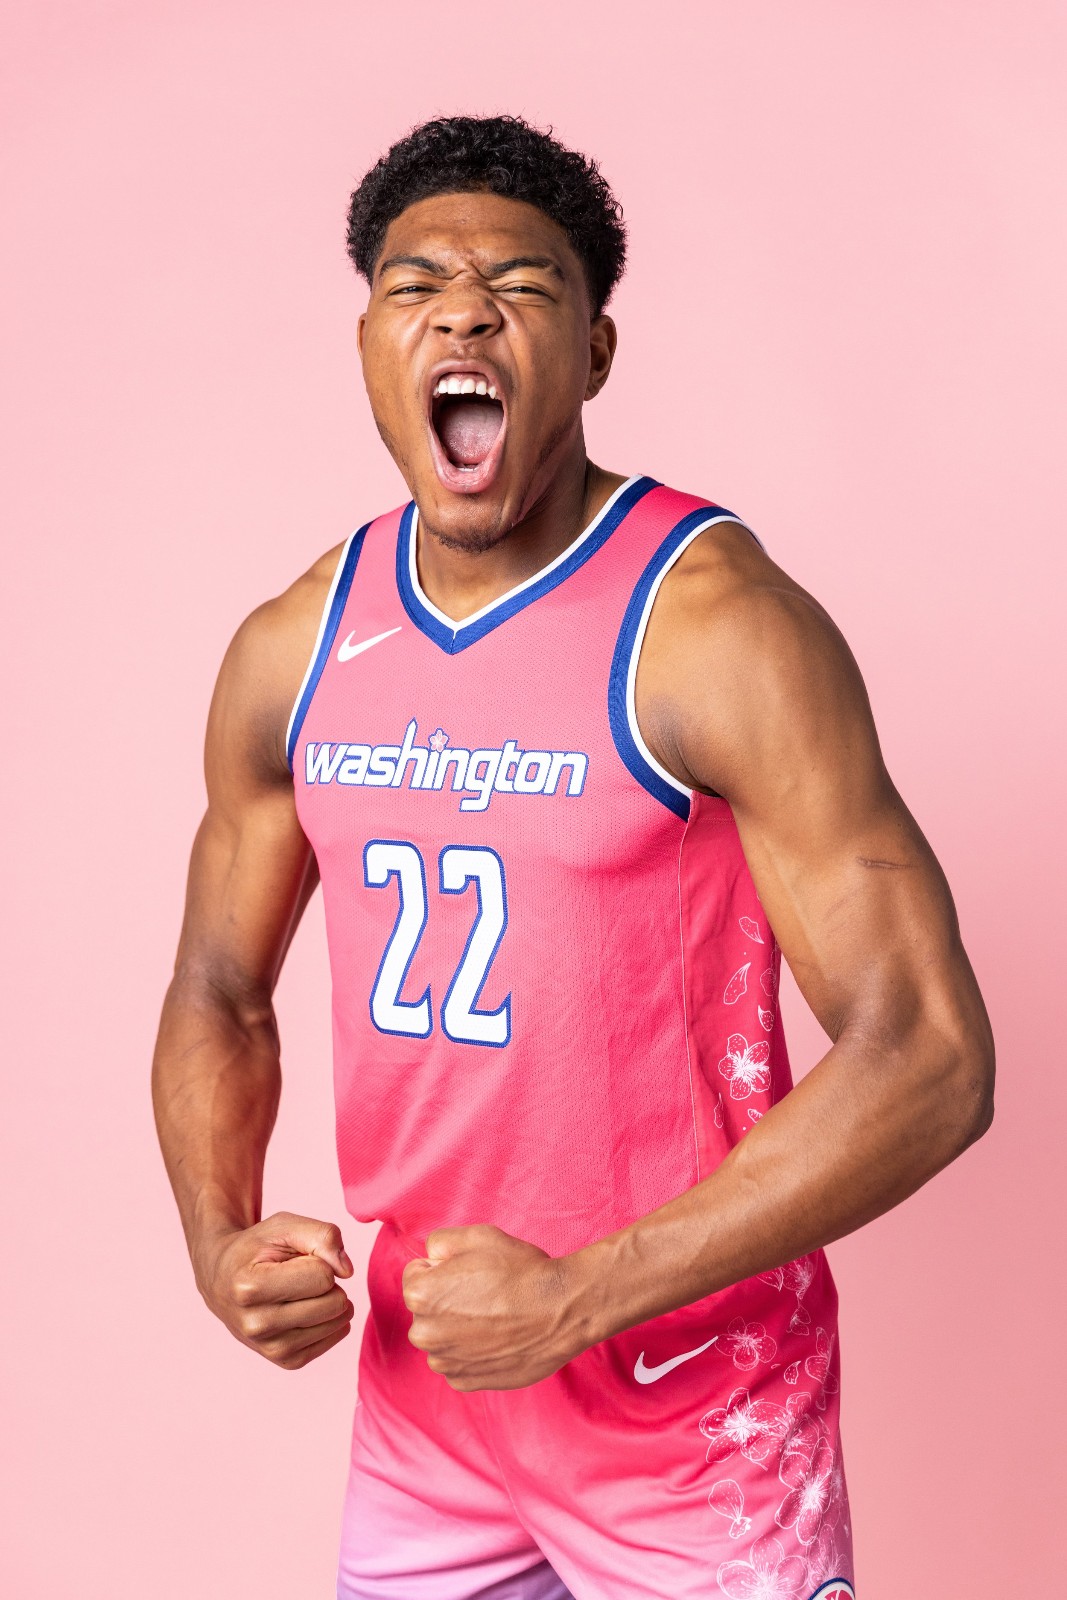 2022 City Version NBA Washington Wizards Pink #33 Jersey,Washington Wizards